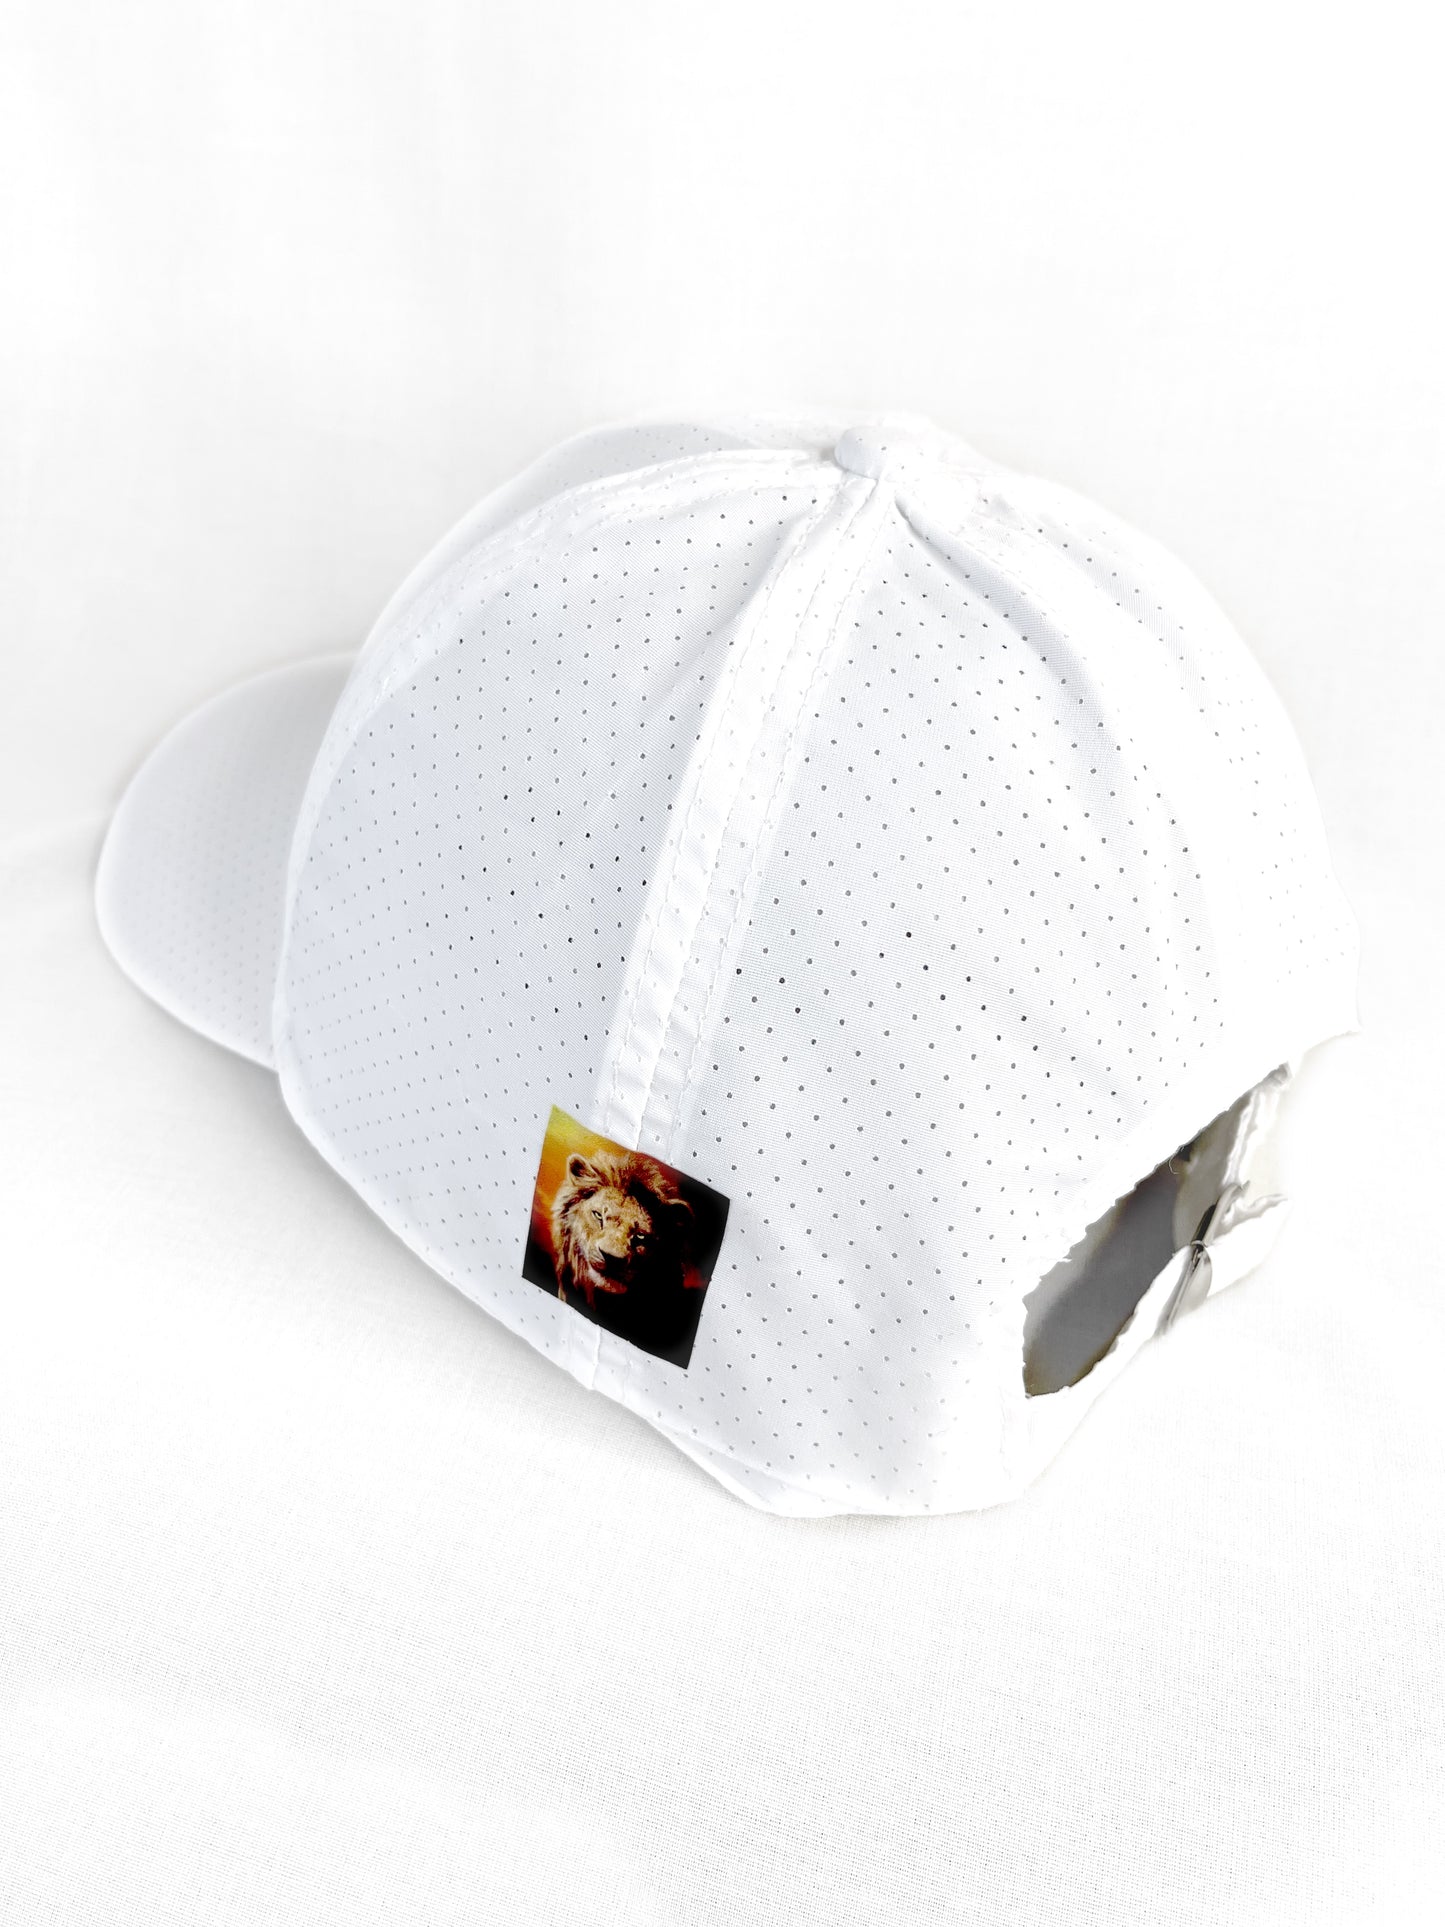 FitzOne White Sports Mesh Hat (Black Logo)